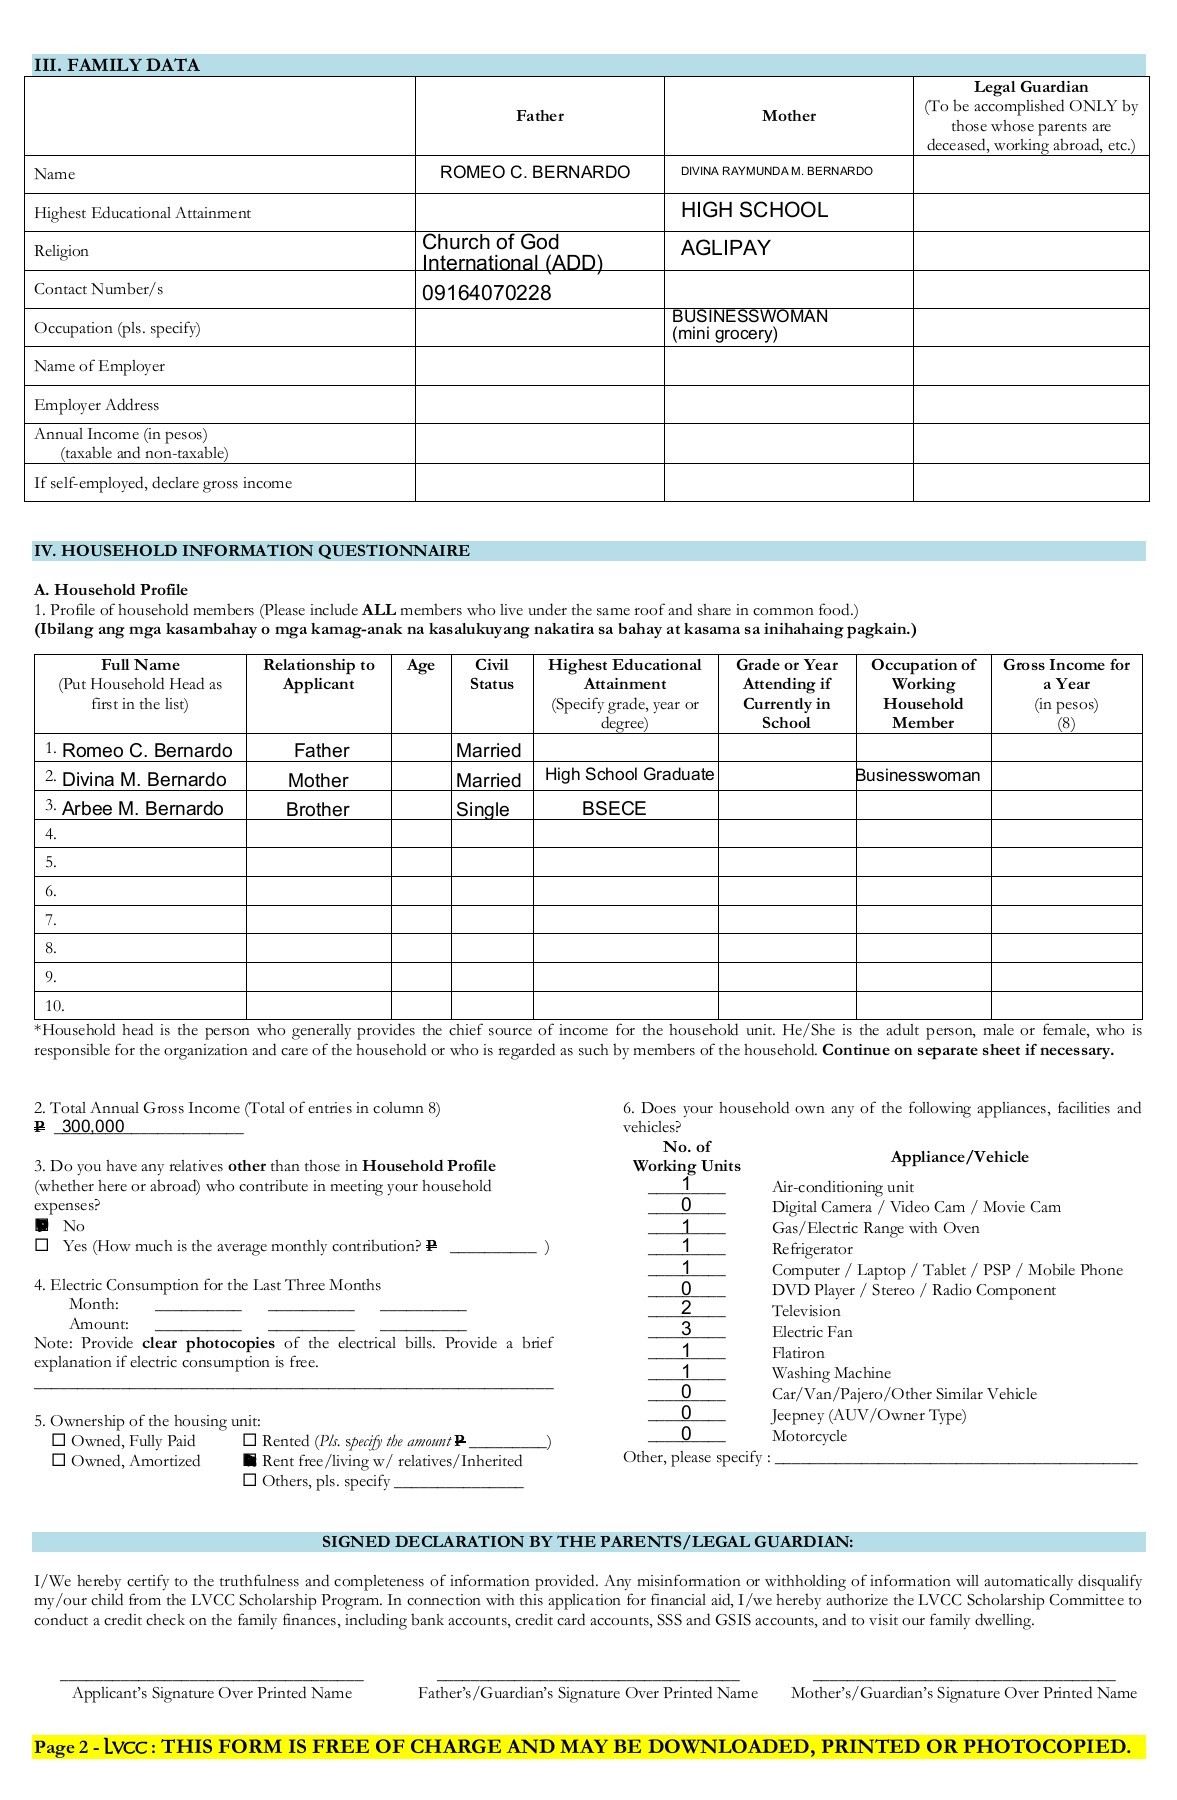 Hagen Technical College Application Form 2015 Pdf 2020